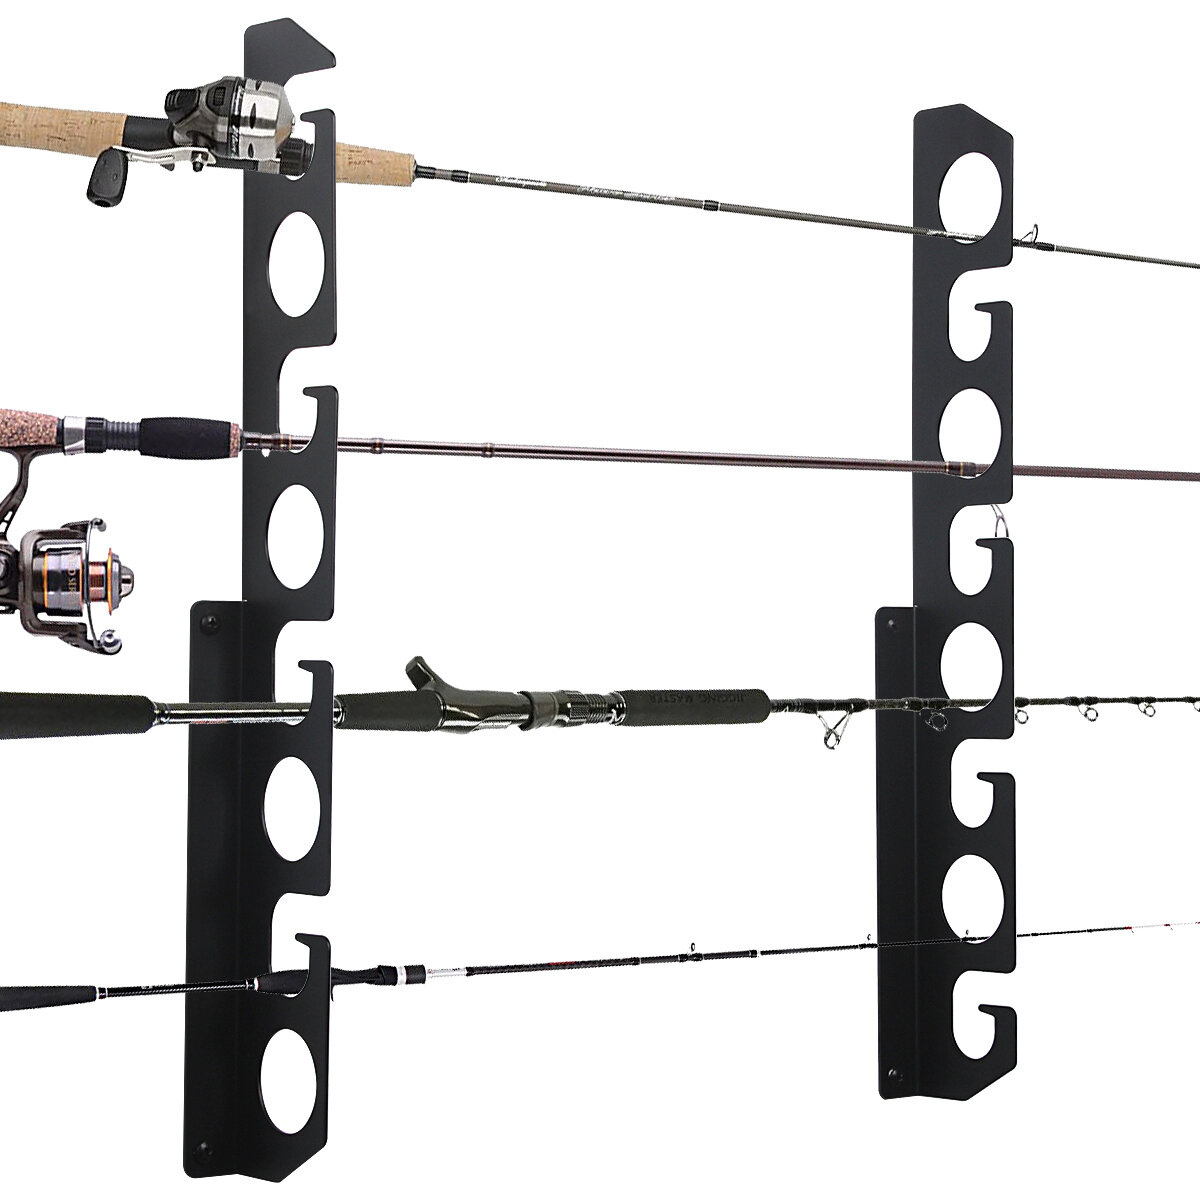 Horizontal Fishing Rod Storage Rack Holder Wall Mount to Hold 6 Fishing Rods Fishing Rod Display Stand No Fishing Rod